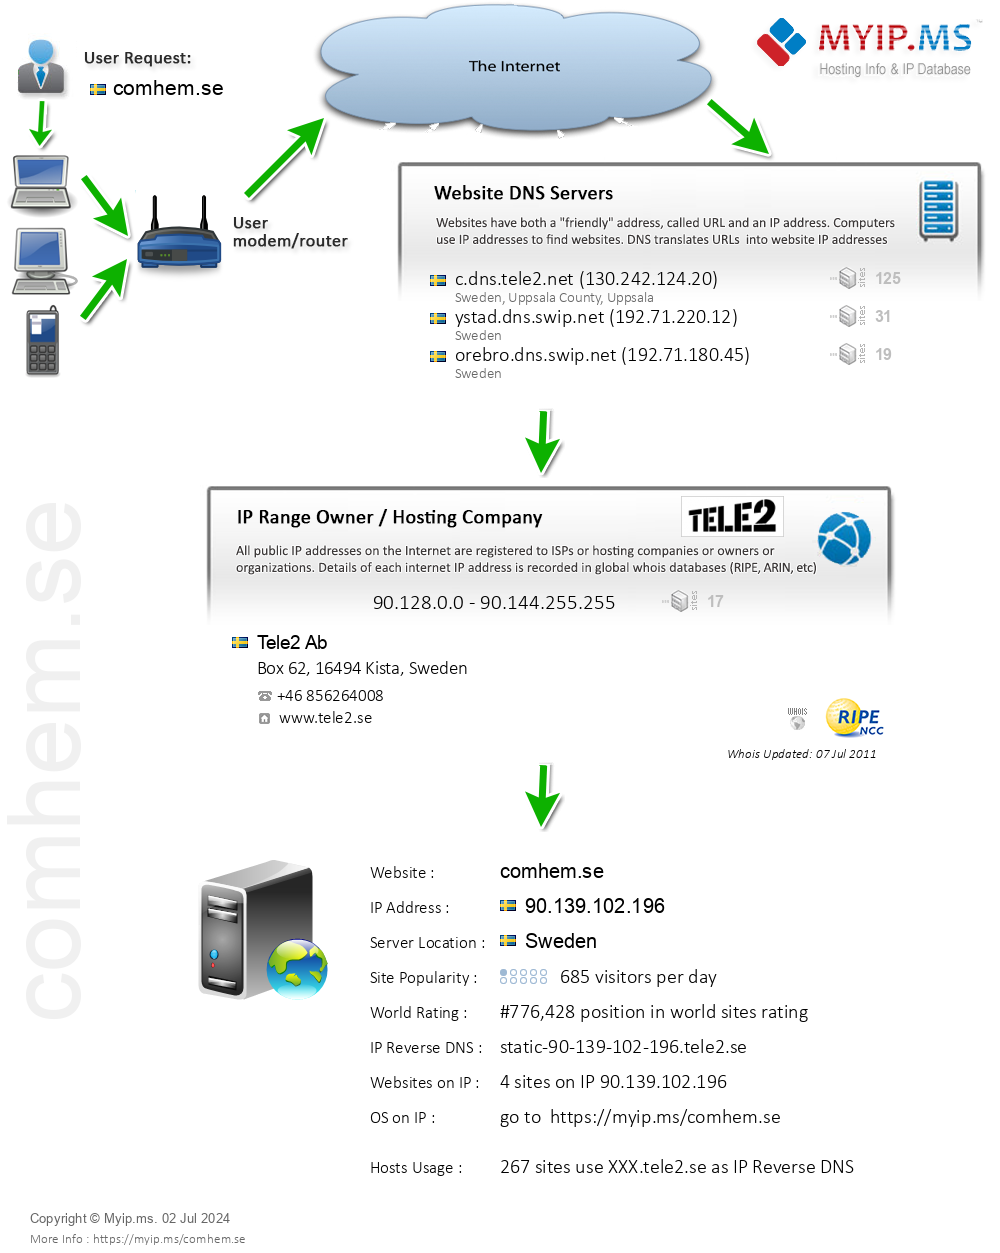 Comhem.se - Website Hosting Visual IP Diagram